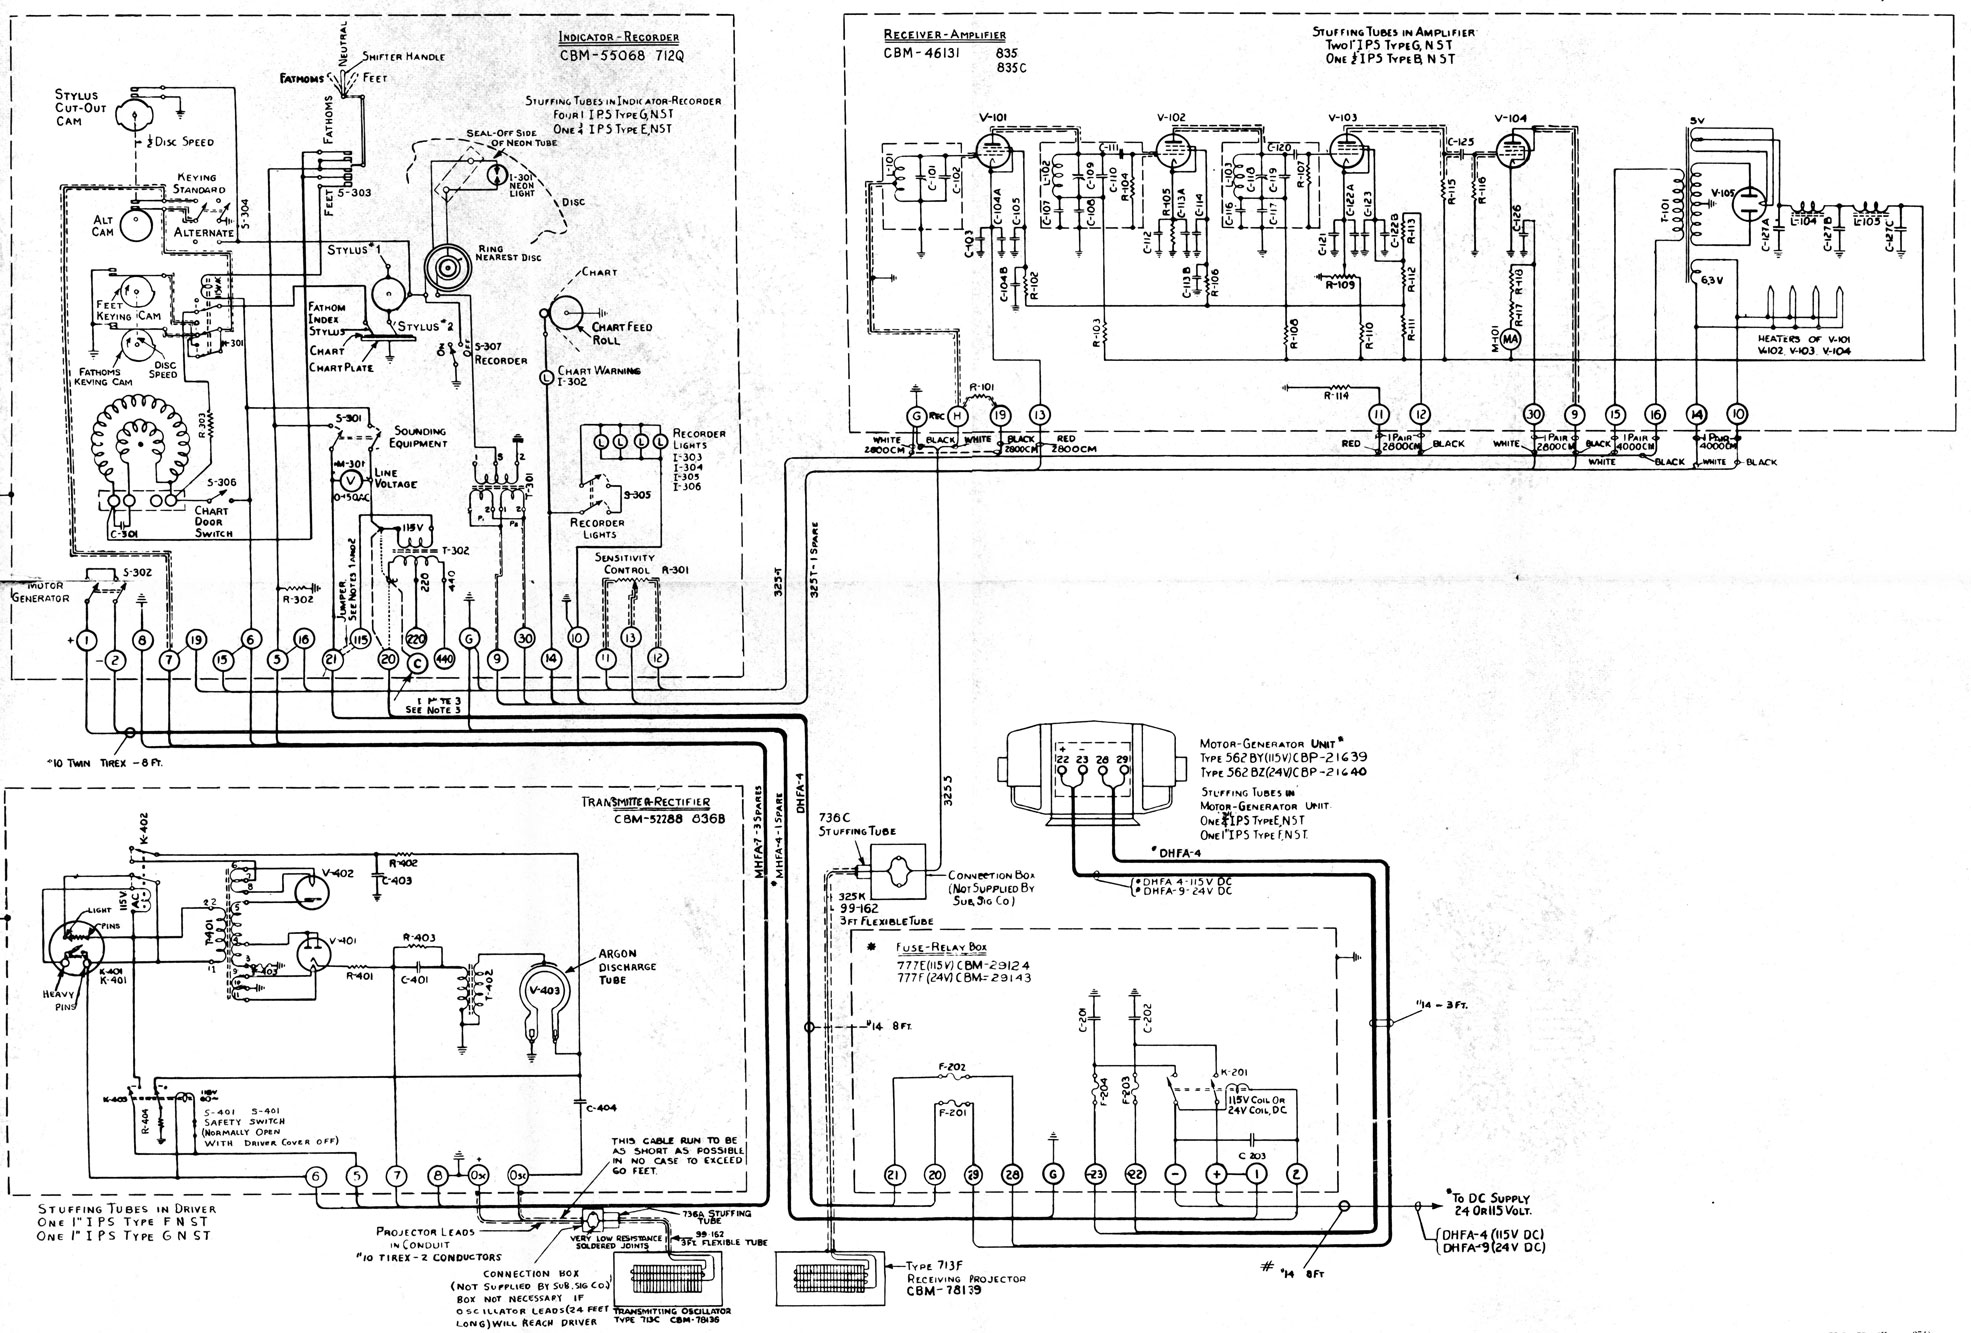 Figure 15-6. -Schematic wiring diagram of the NJ-9 sounding equipment.